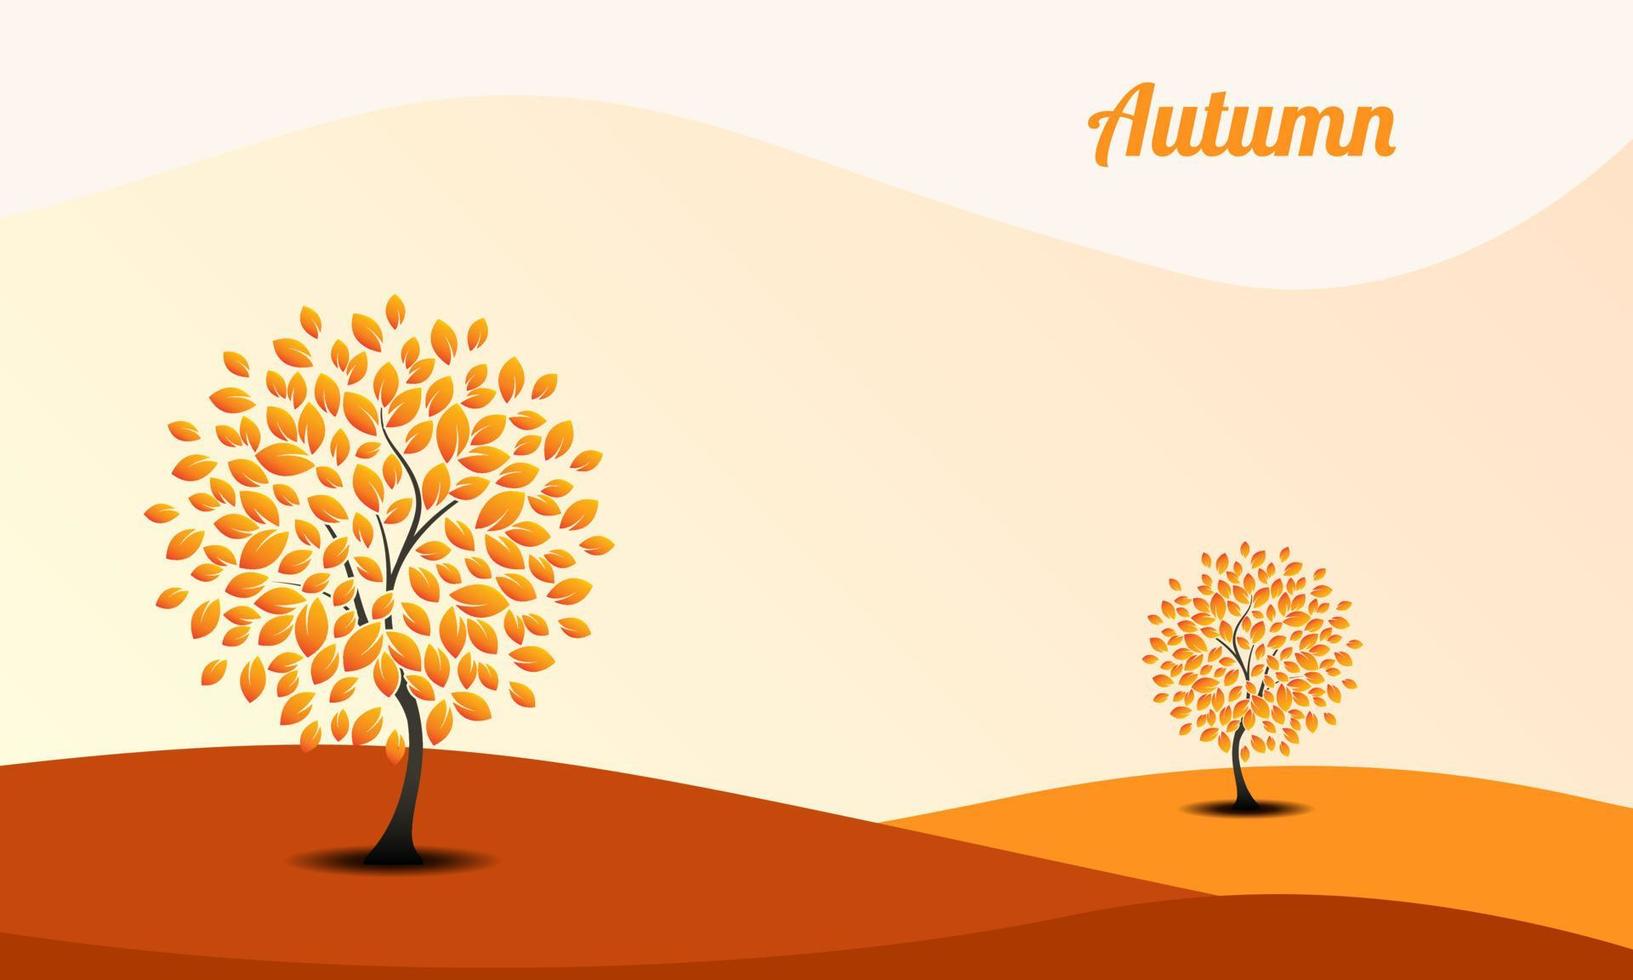 autumn tree leaf vector illustration. template background.